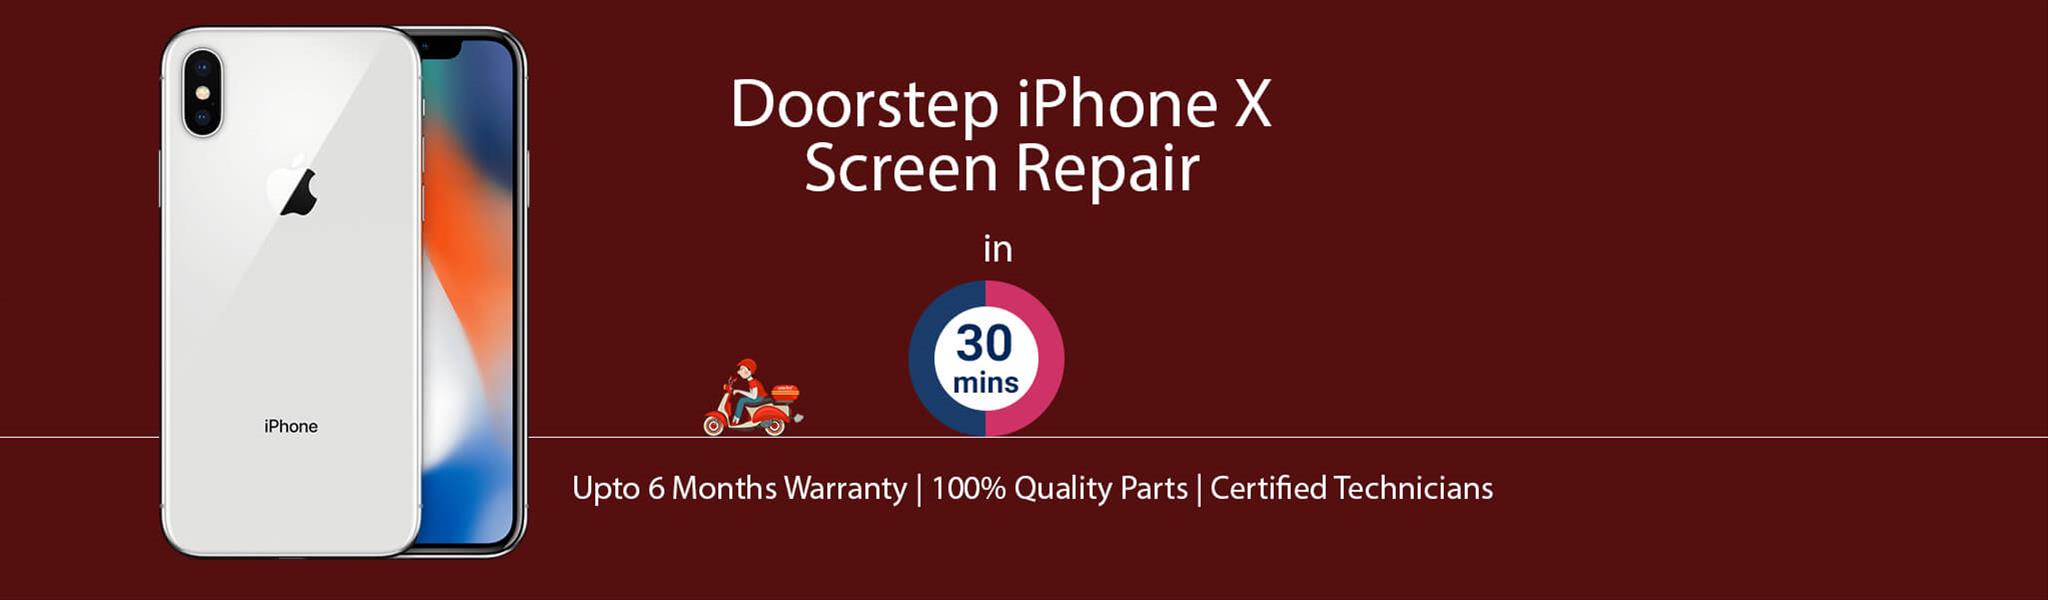 iphone-x-screen-repair.jpg